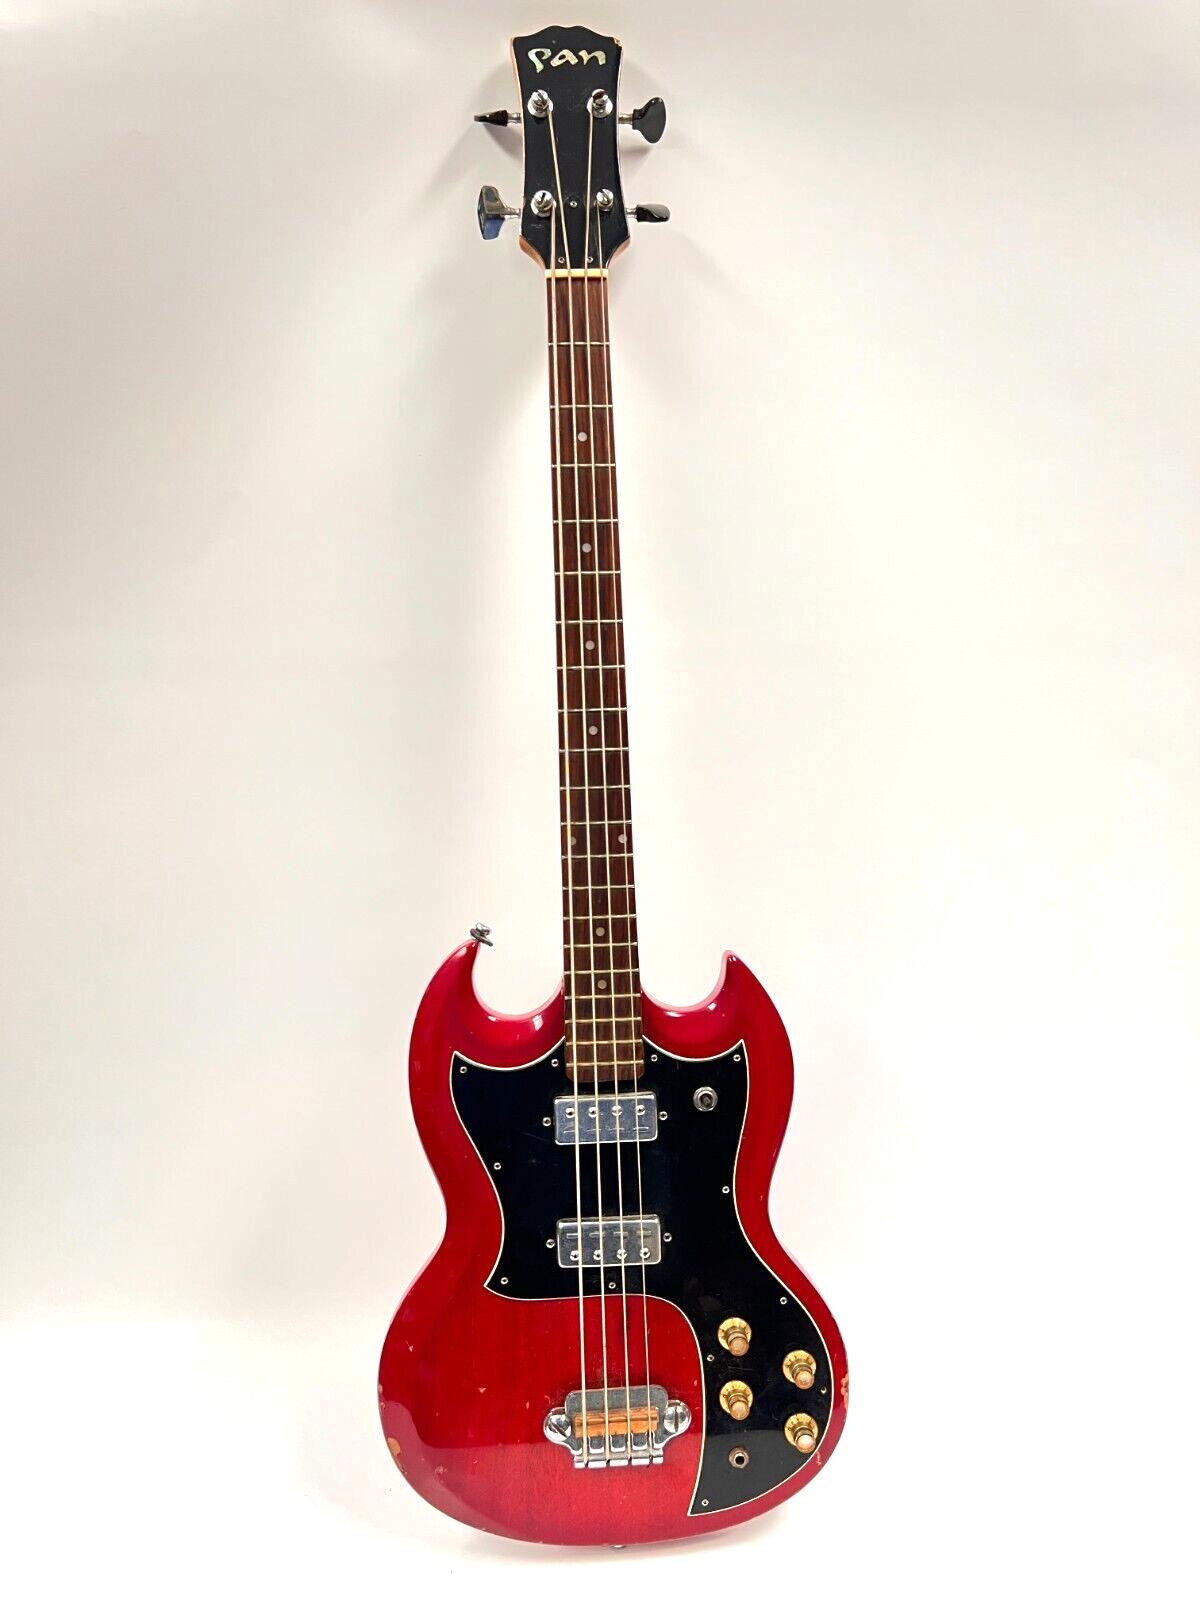 1970's PAN Matsumoku EB-3 Type Solid Body Electric Bass Guitar JAPAN Lawsuit Era